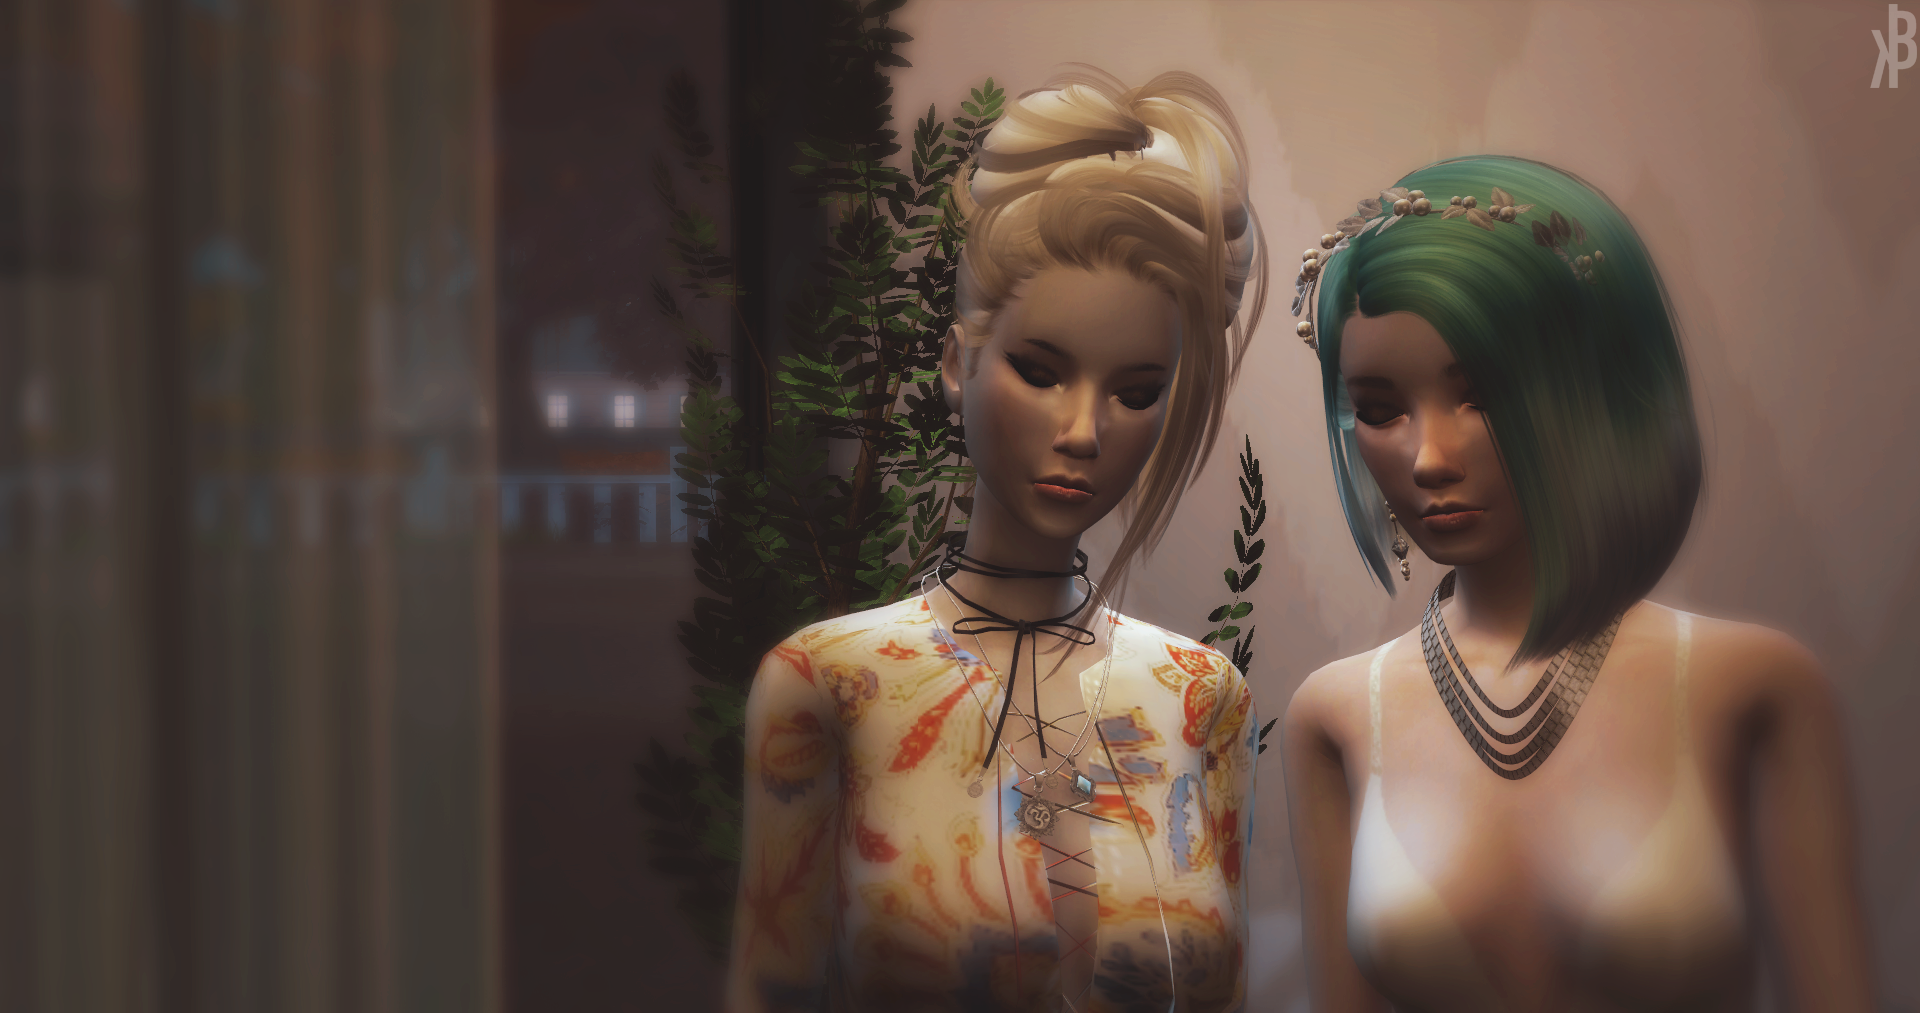 General 1920x1013 Sims 4 video games screen shot PC gaming boobs dress green hair blonde two women